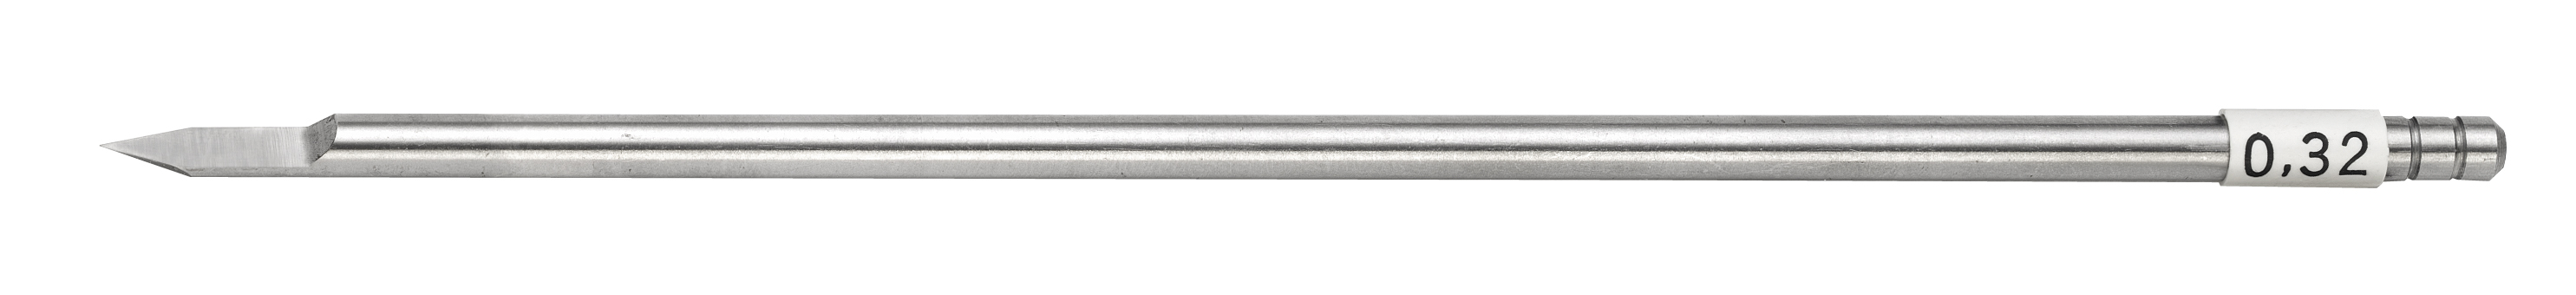 WS-frees steel-Ø 3,17 mm breedte 0,32 mm Gravograph